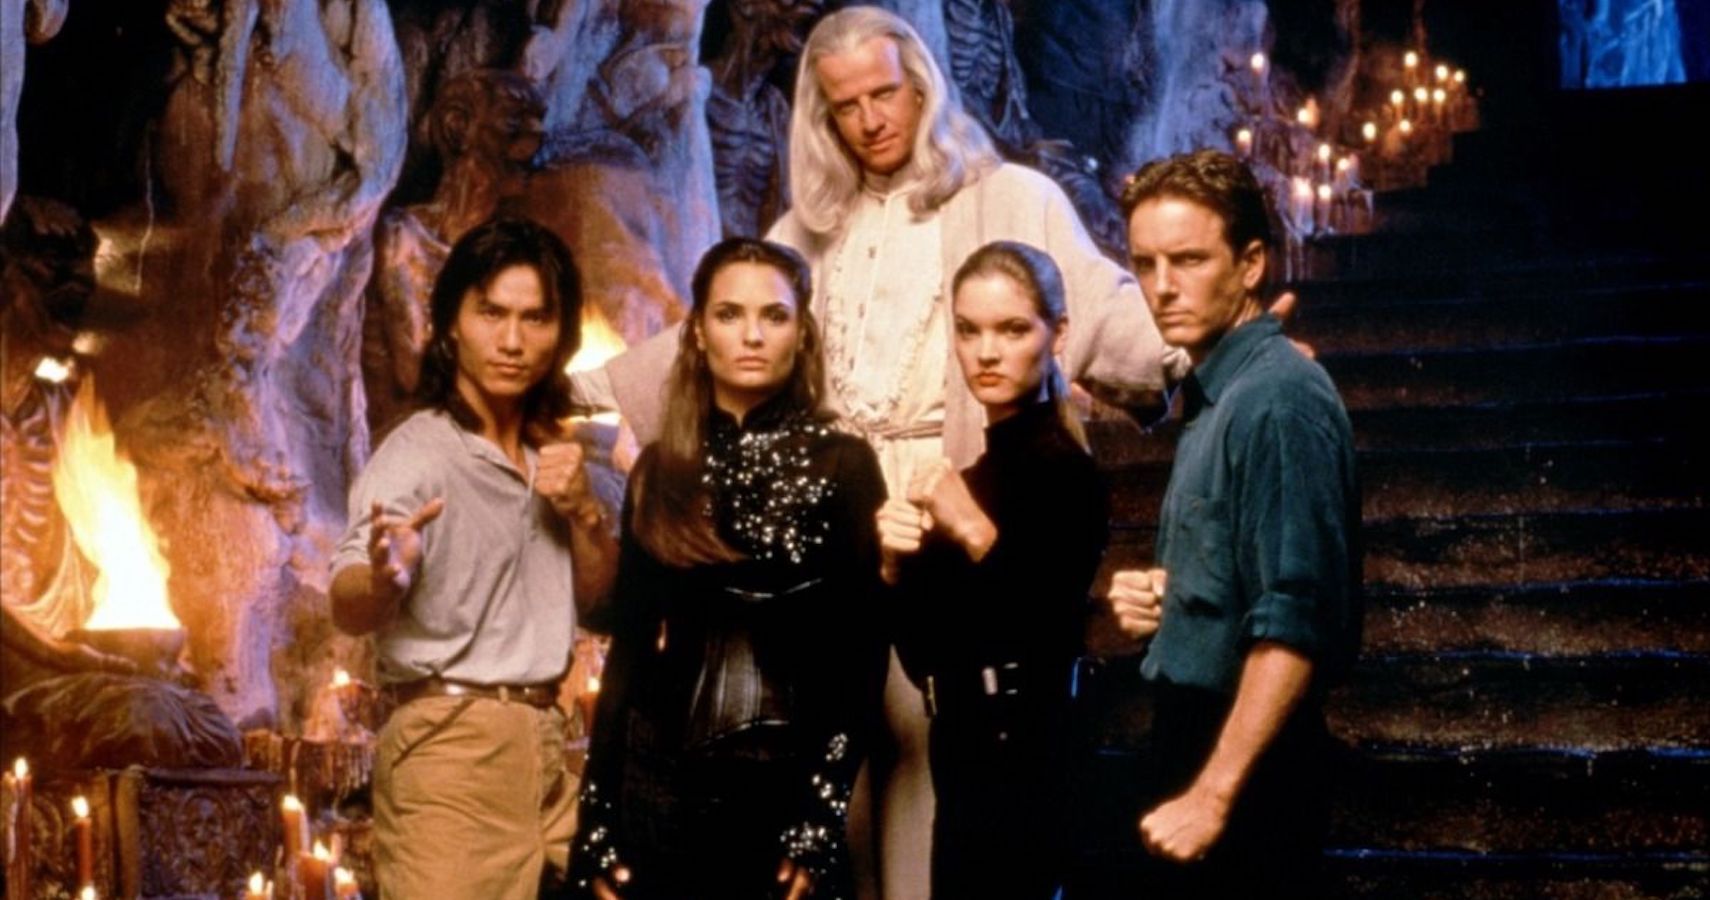 mortal kombat 1995 movie characters